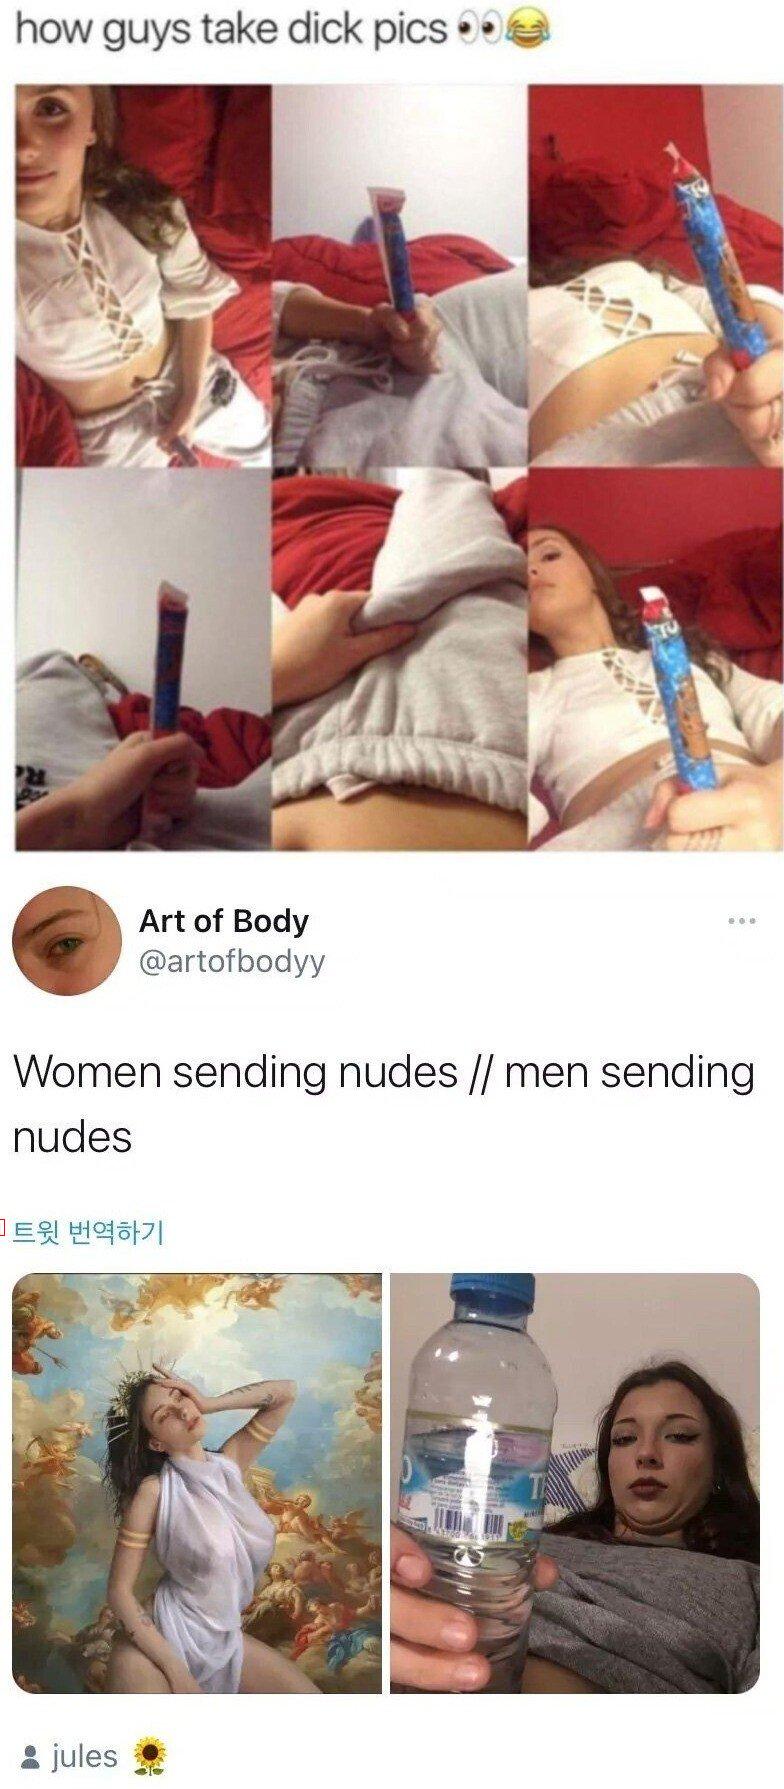 How pervert men take and send jj photos.jpg